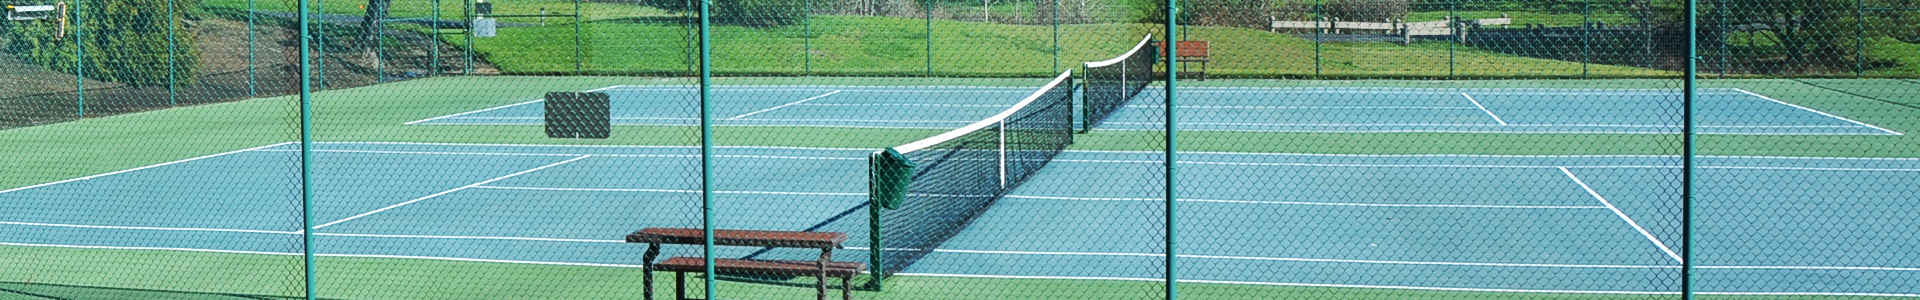 Hartung Farms Tennis Courts